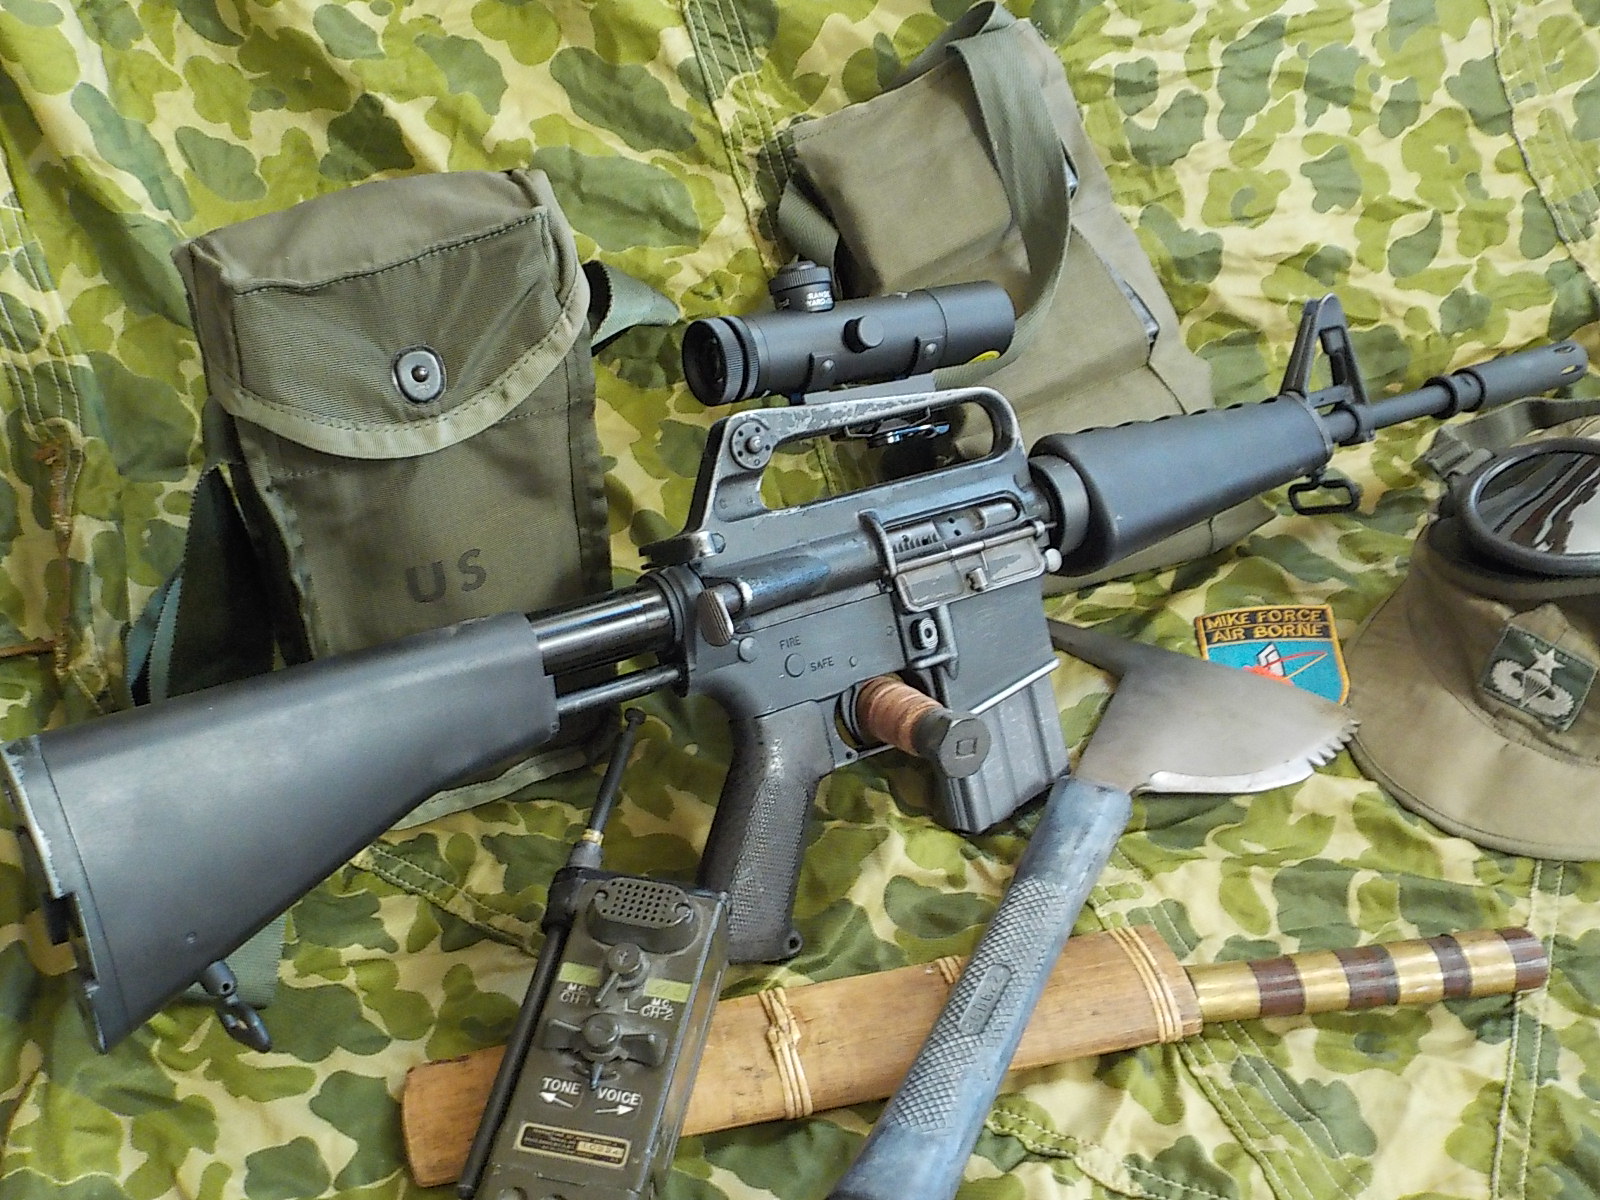 SOLD - Vietnam era Colt 607 with Colt scope | Sniper's Hide Forum